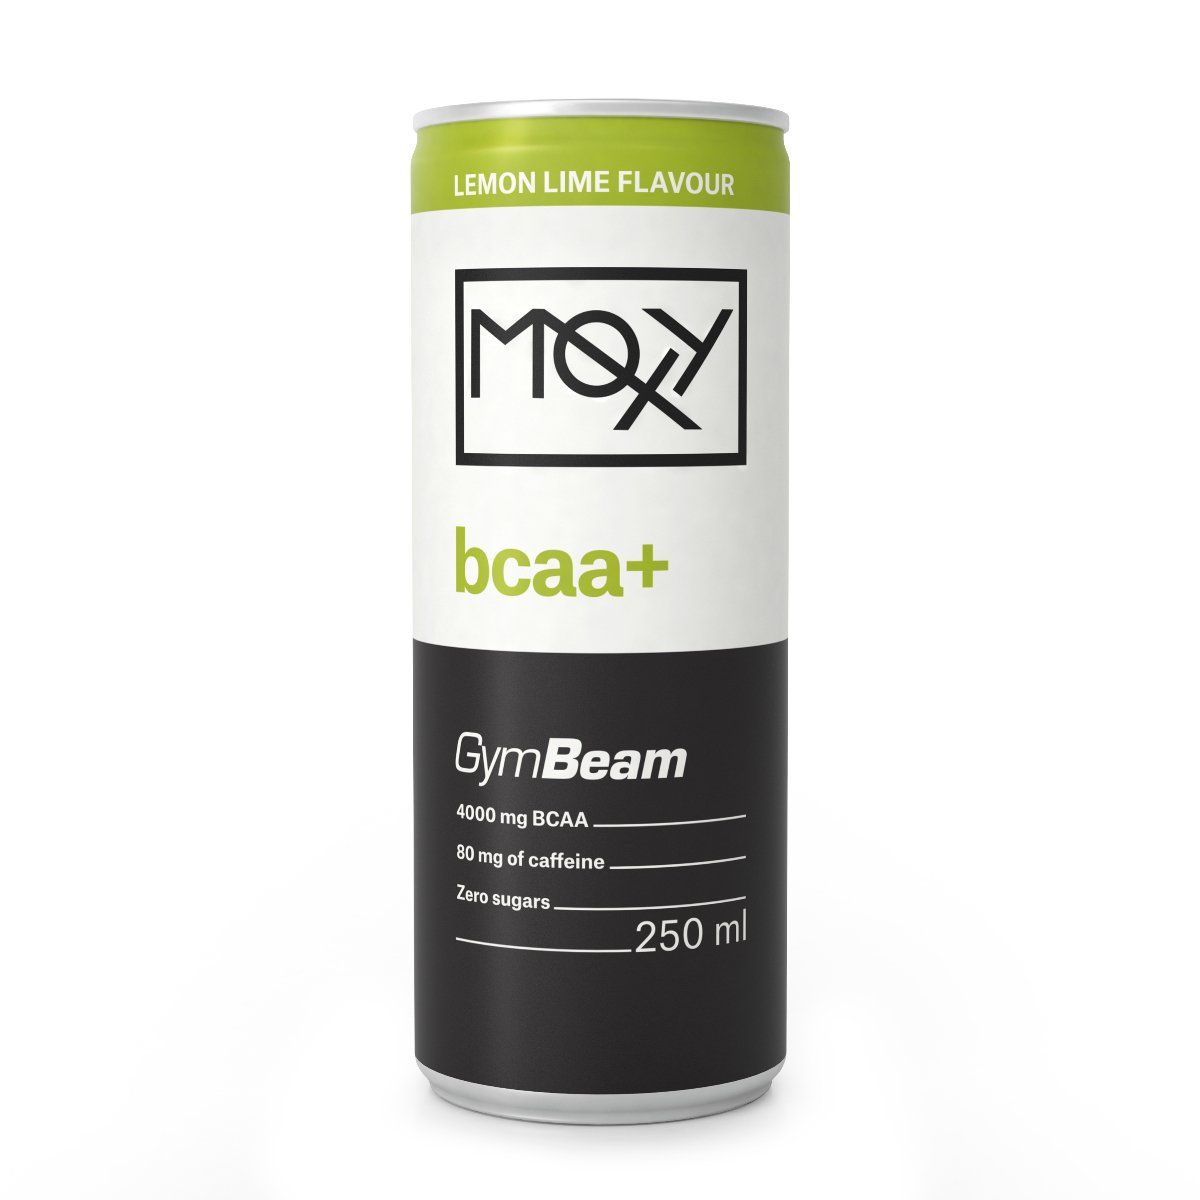 GYMBEAM - MOXY BCAA+ ENERGY DRINK - 6X250 ML